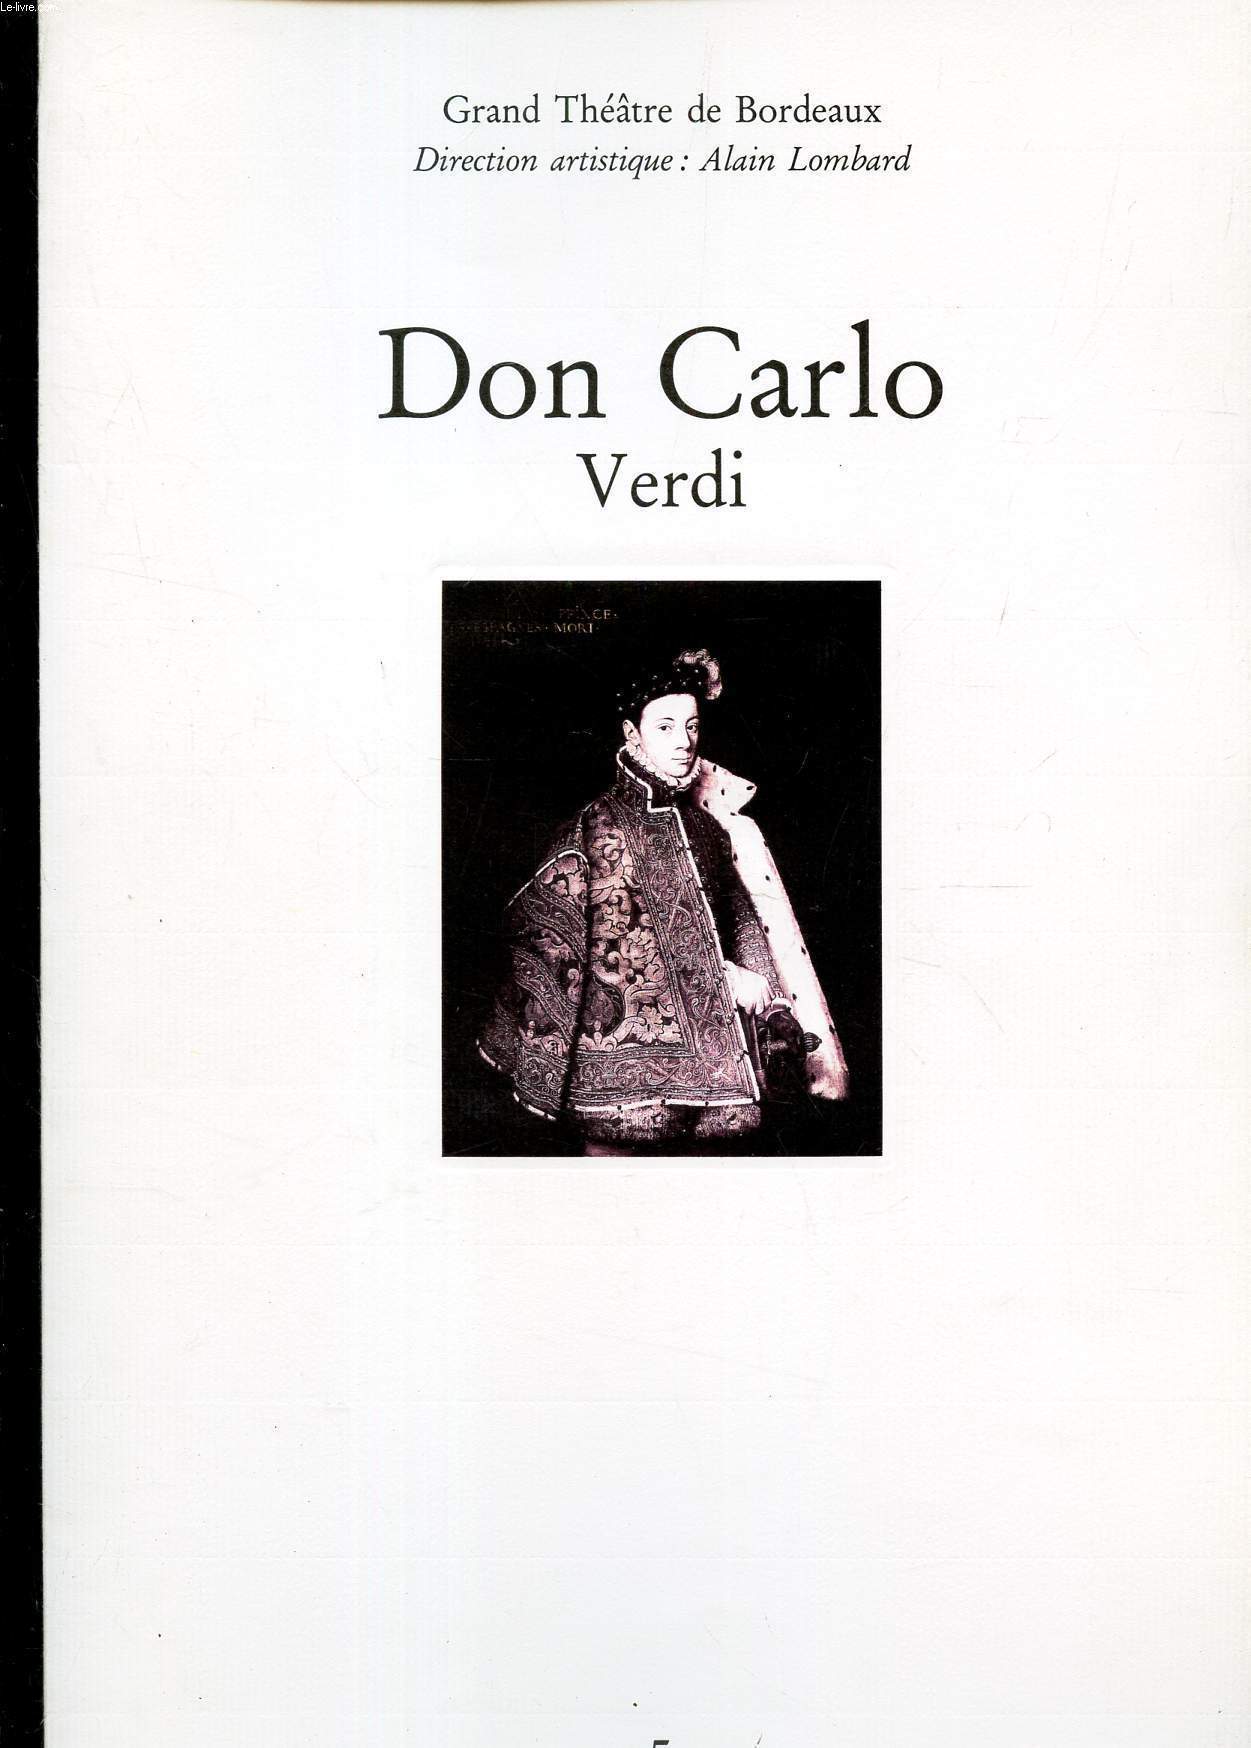 DON CARLO VERDI